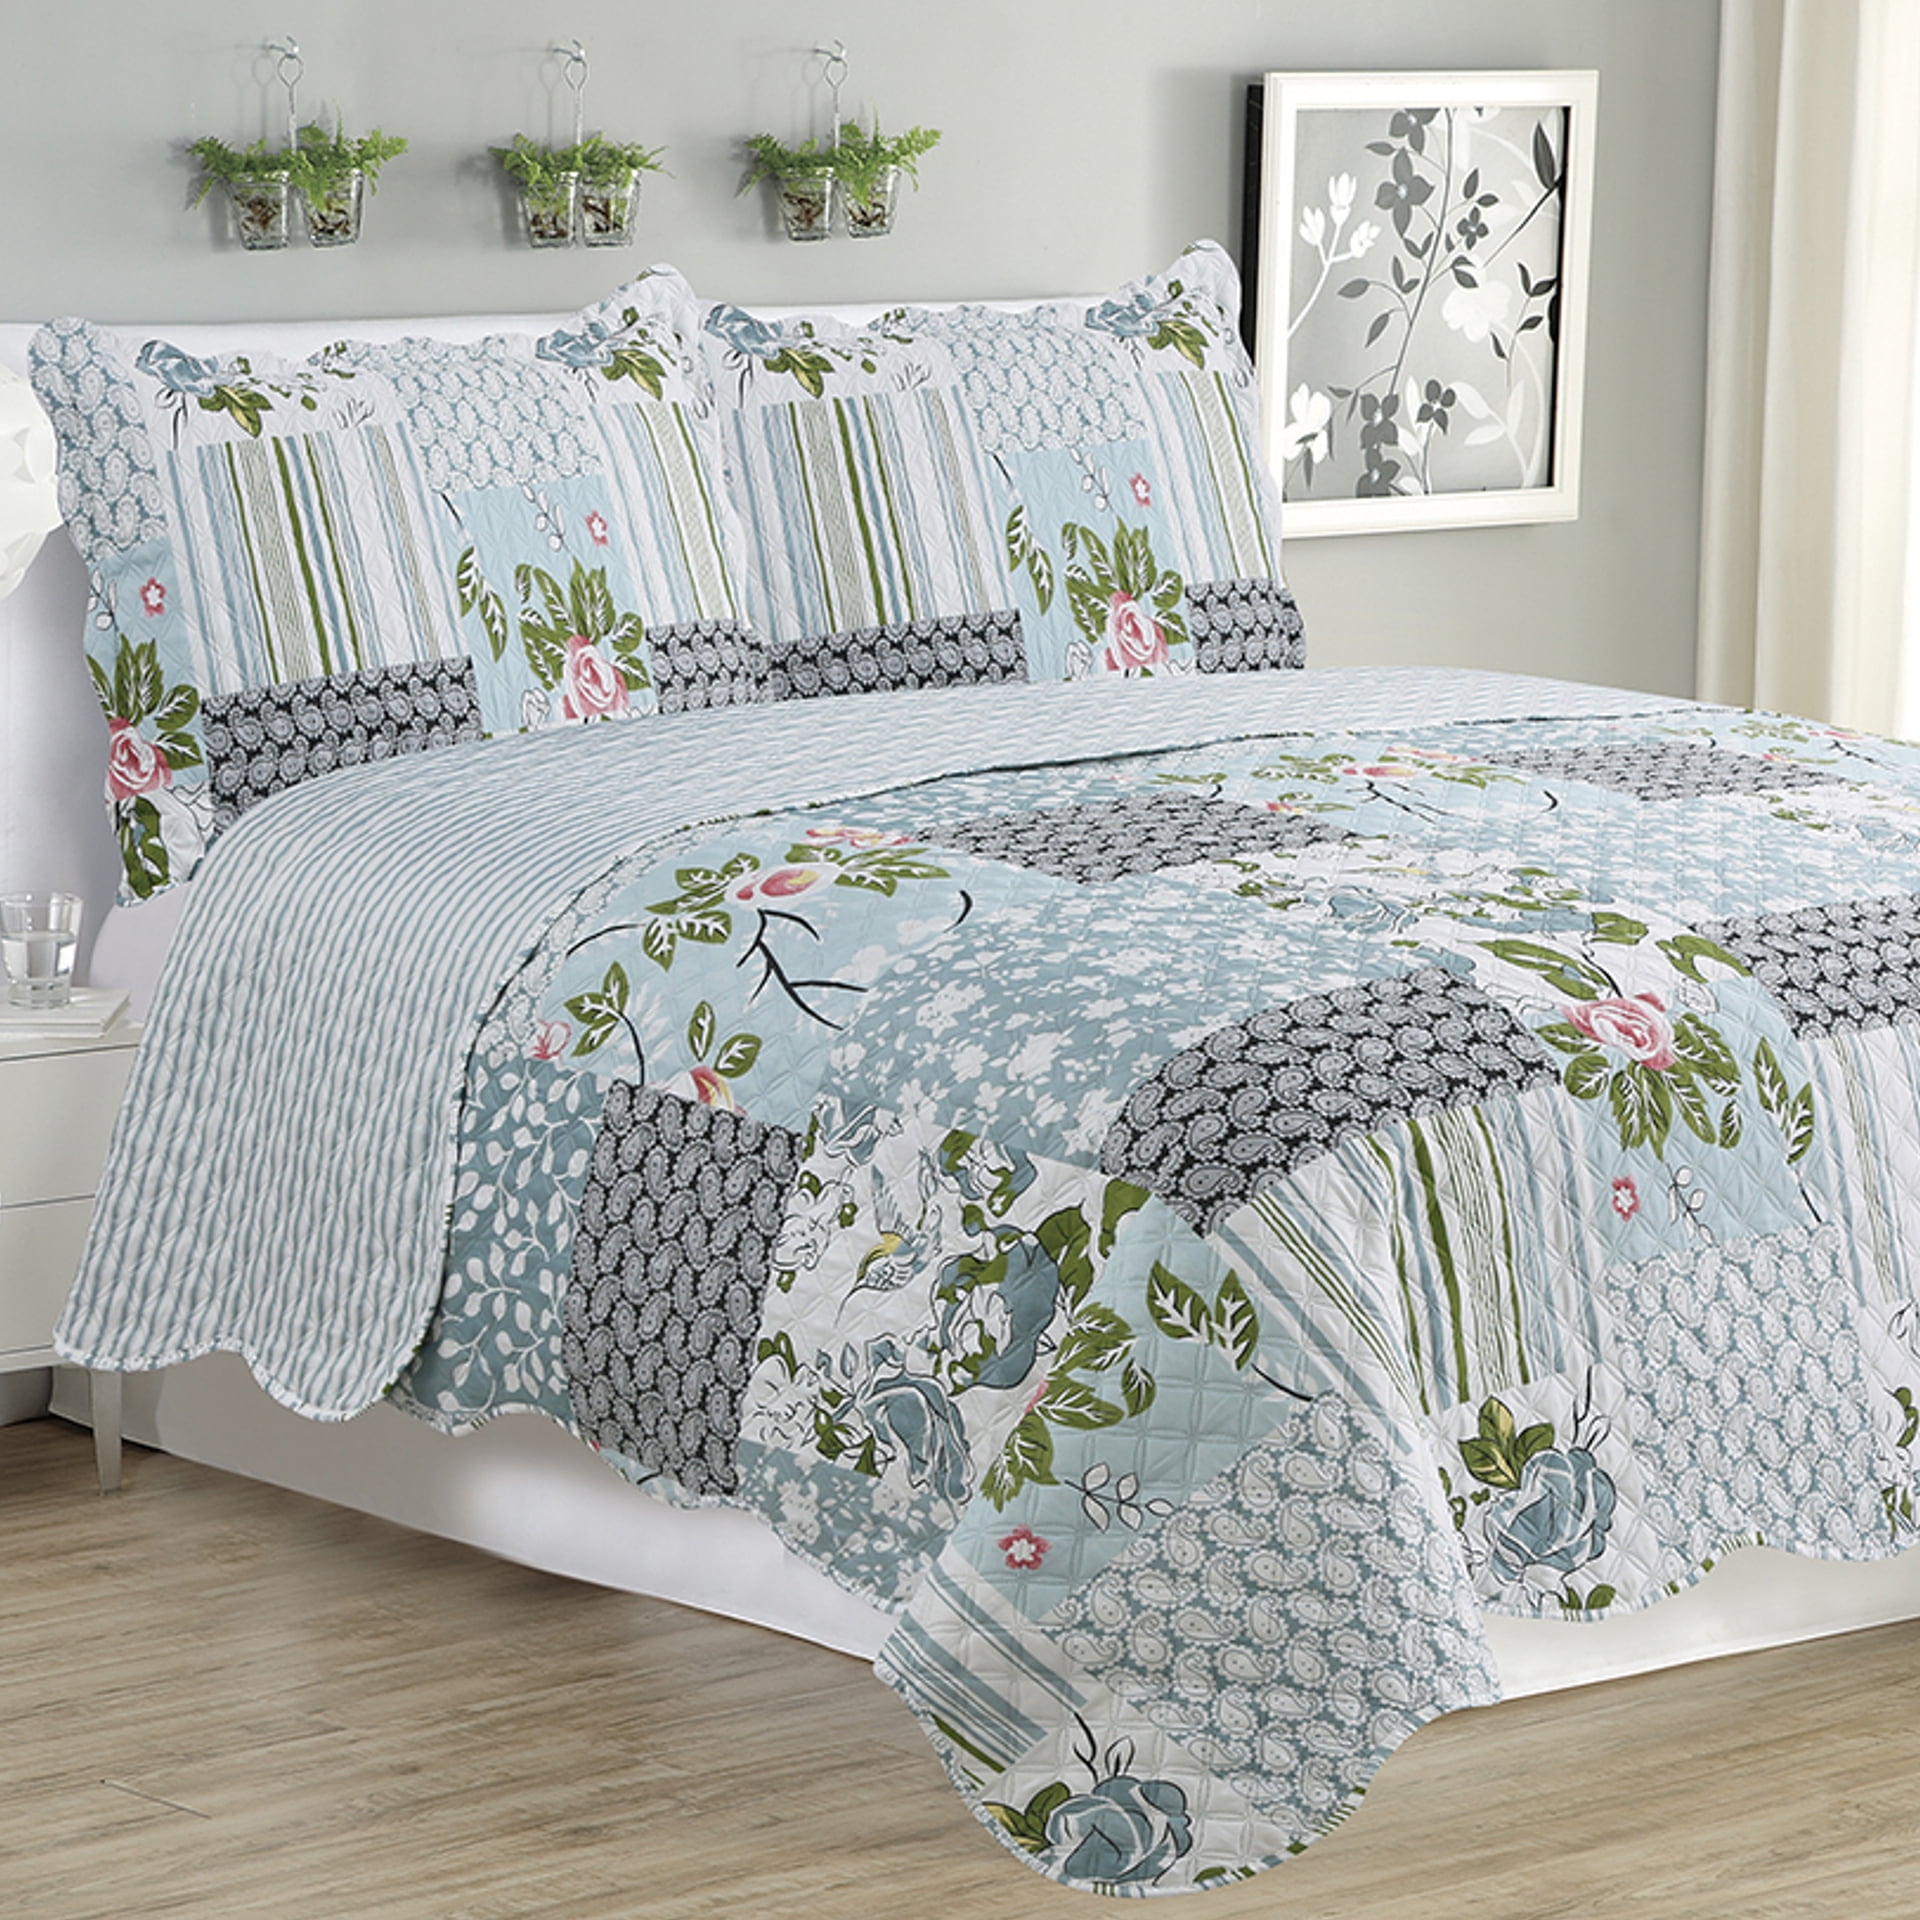 Queen Size Bedspread Sets - Image to u